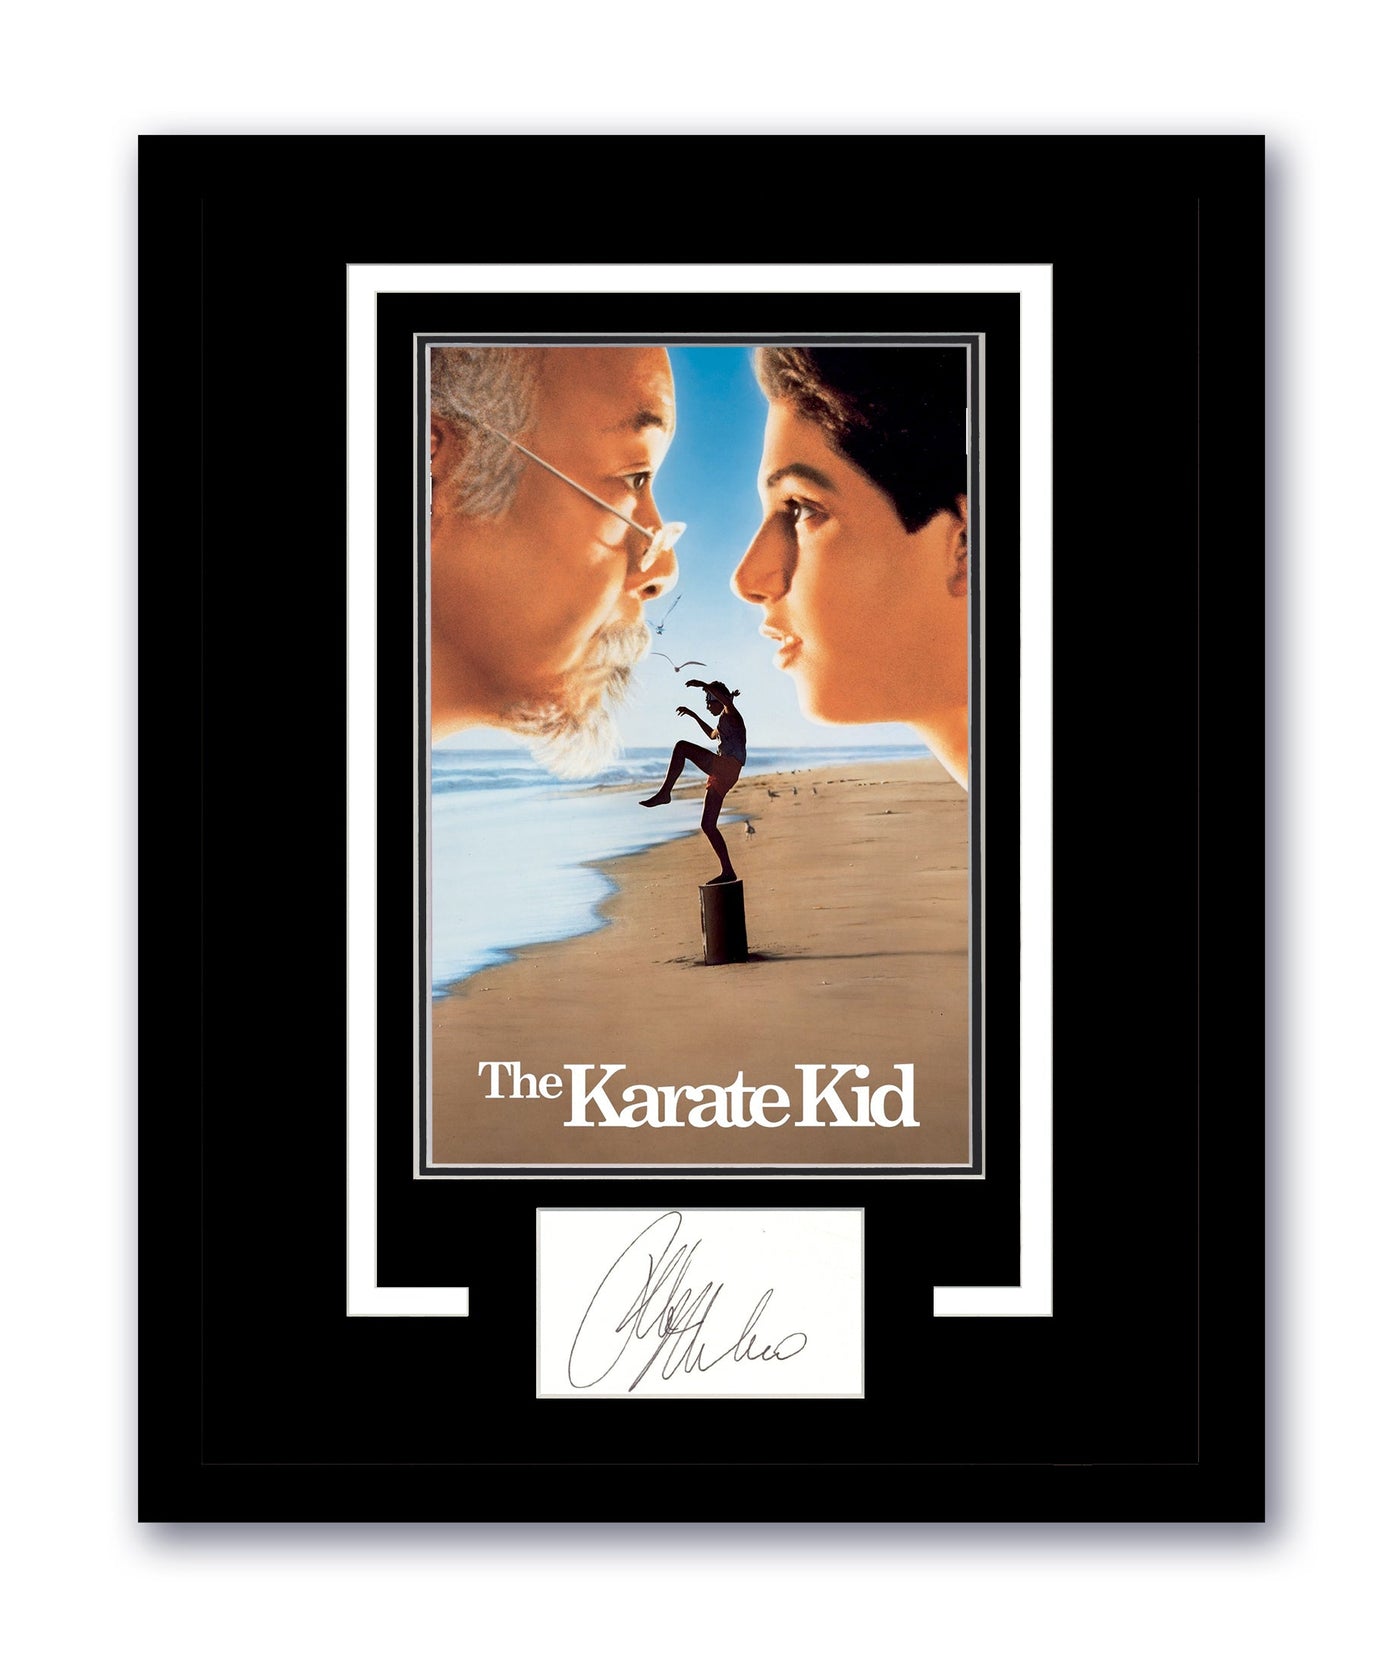 Ralph Macchio Signed 11x14 Framed Cut The Karate Kid Autographed AutographCOA